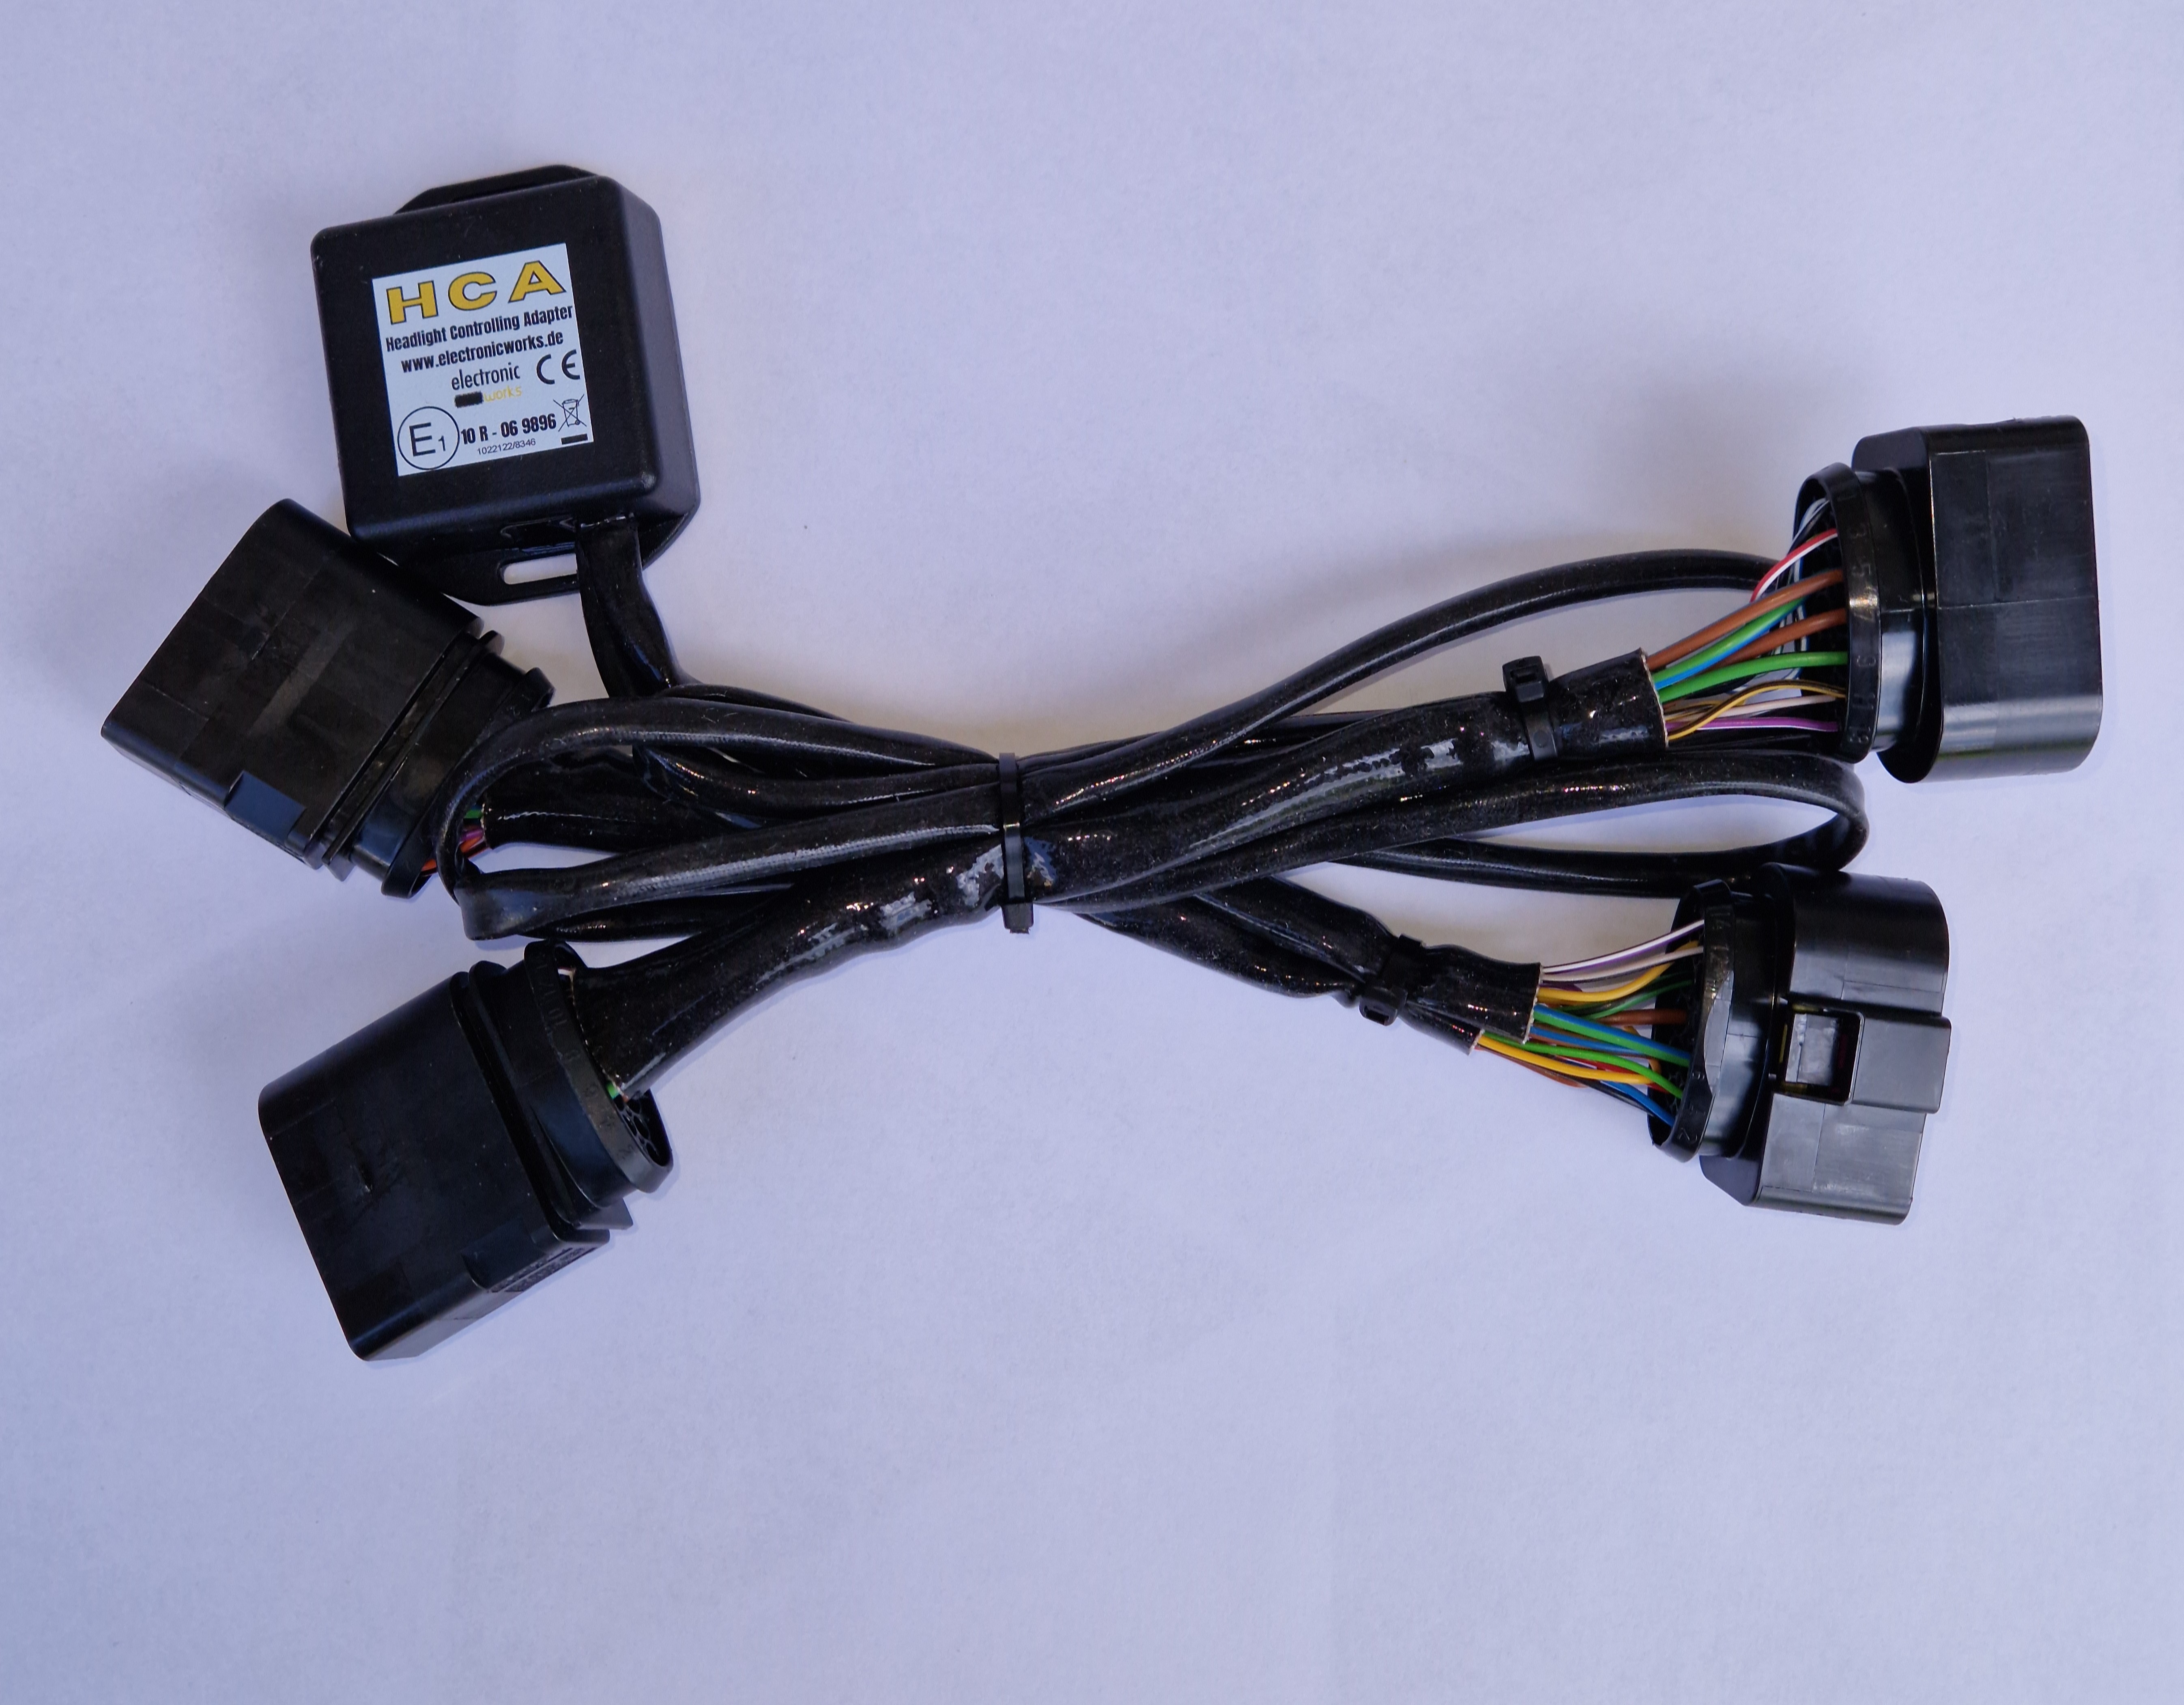 MK7 Headlight Controlling Adapter / Golf 7 Headlight Controlling Adapter  for OSRAM LEDriving Xenon headlights (HCA) - Electronic Works